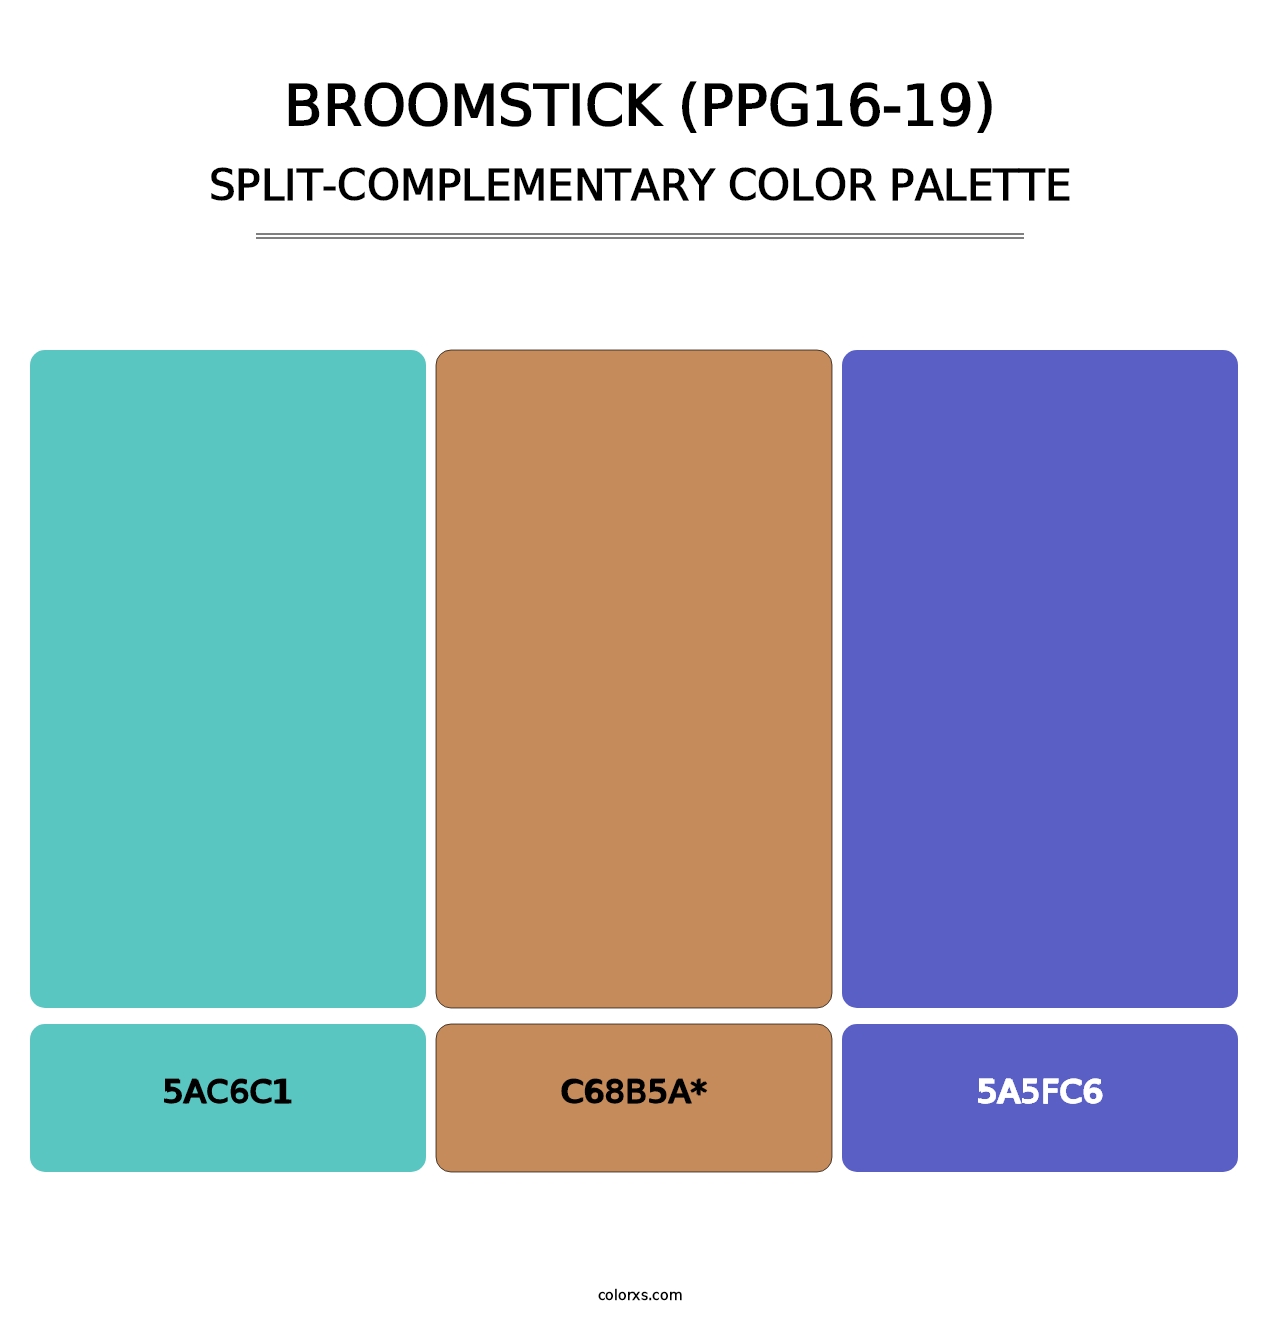 Broomstick (PPG16-19) - Split-Complementary Color Palette